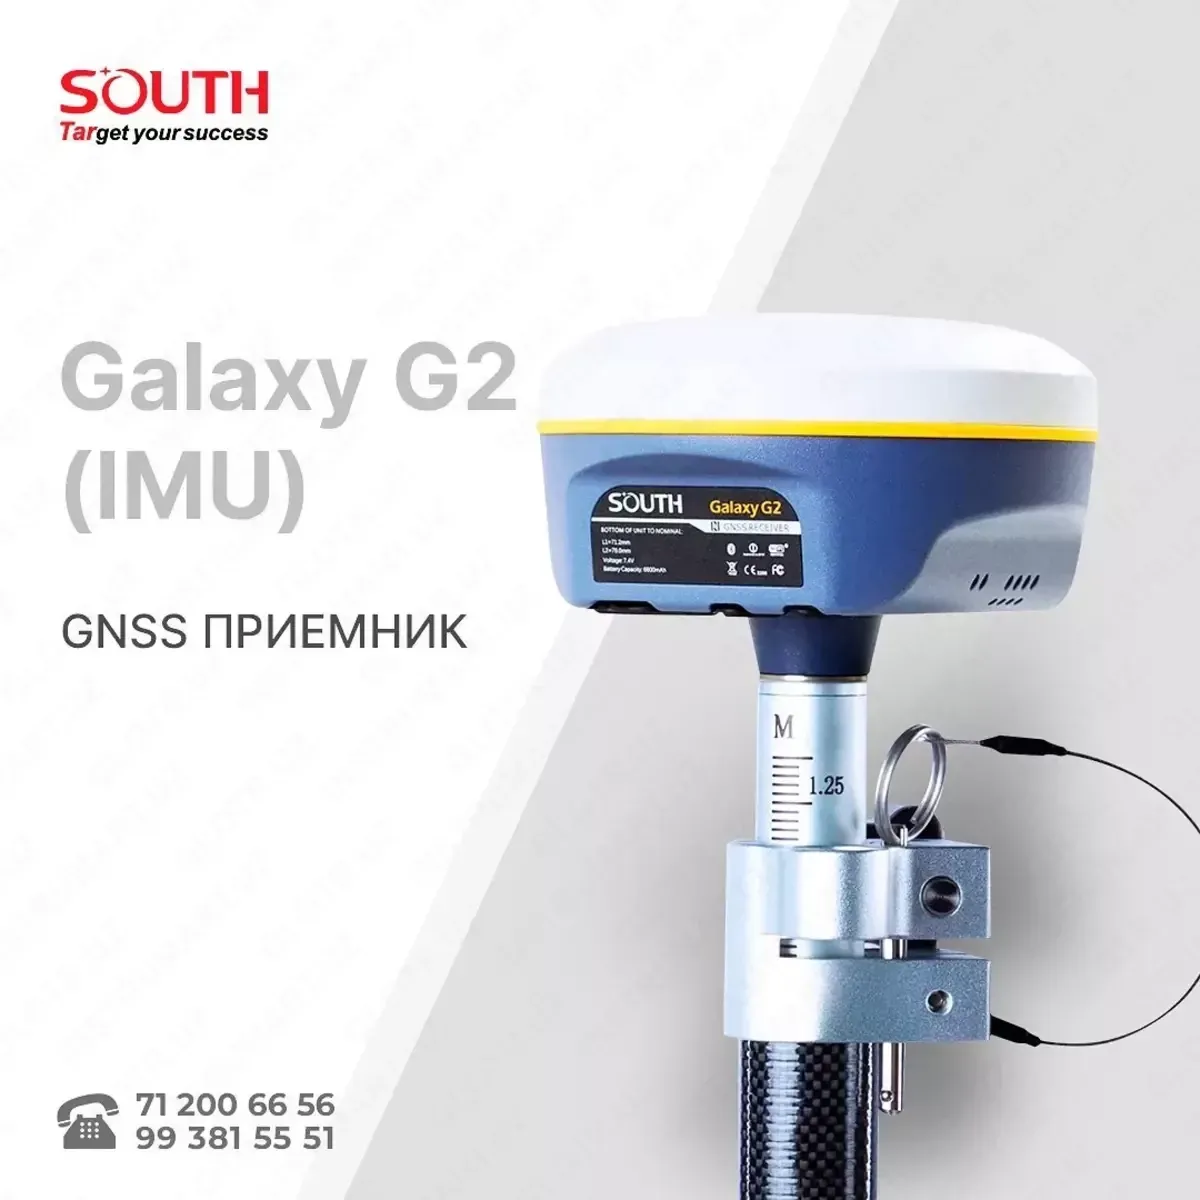 GNSS приемник SOUTH GALAXY G2#1